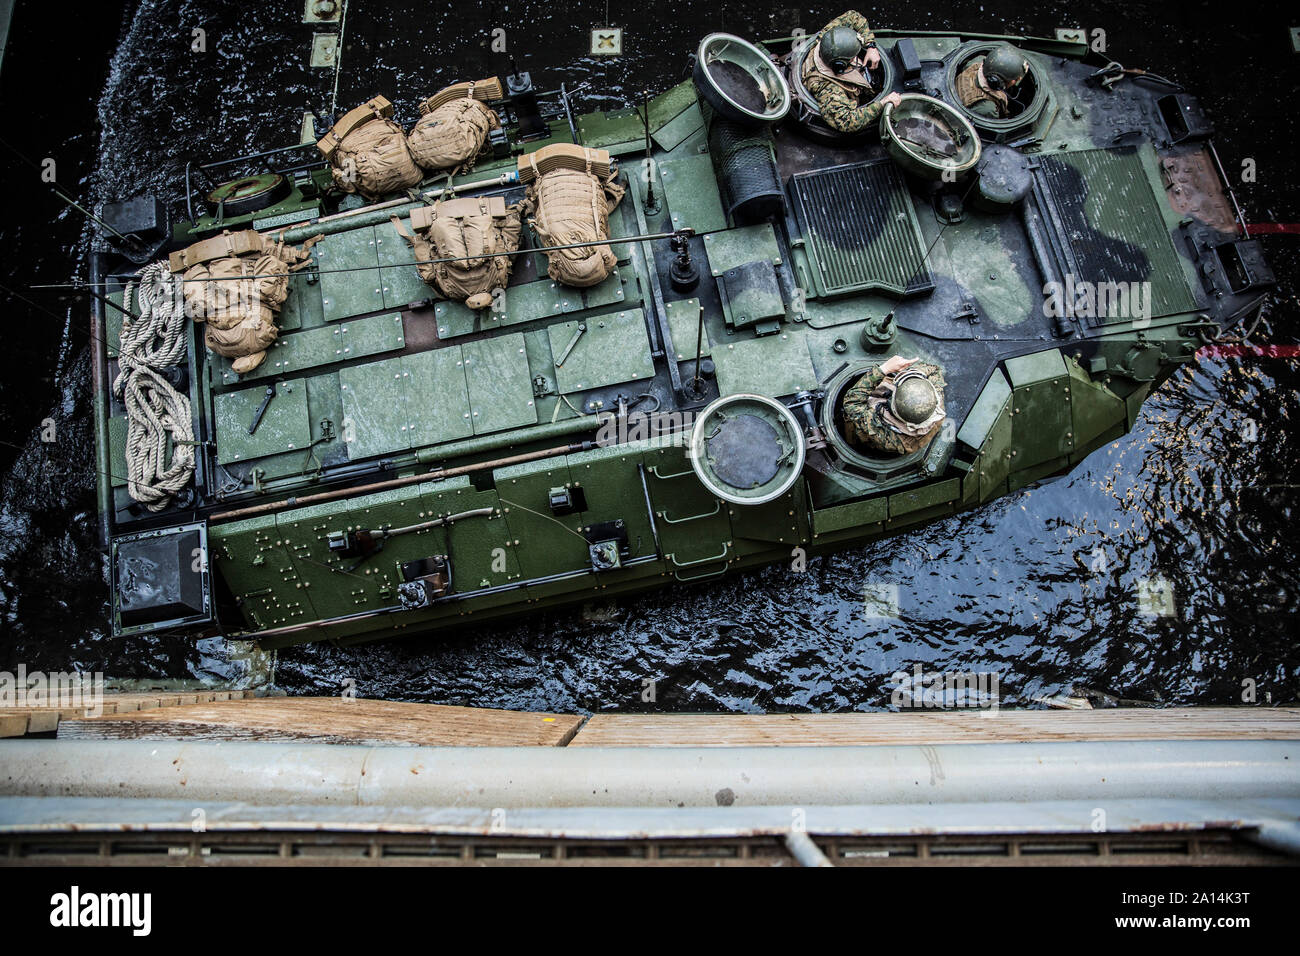 U.S. Marines in an amphibious assault vehicle. Stock Photo